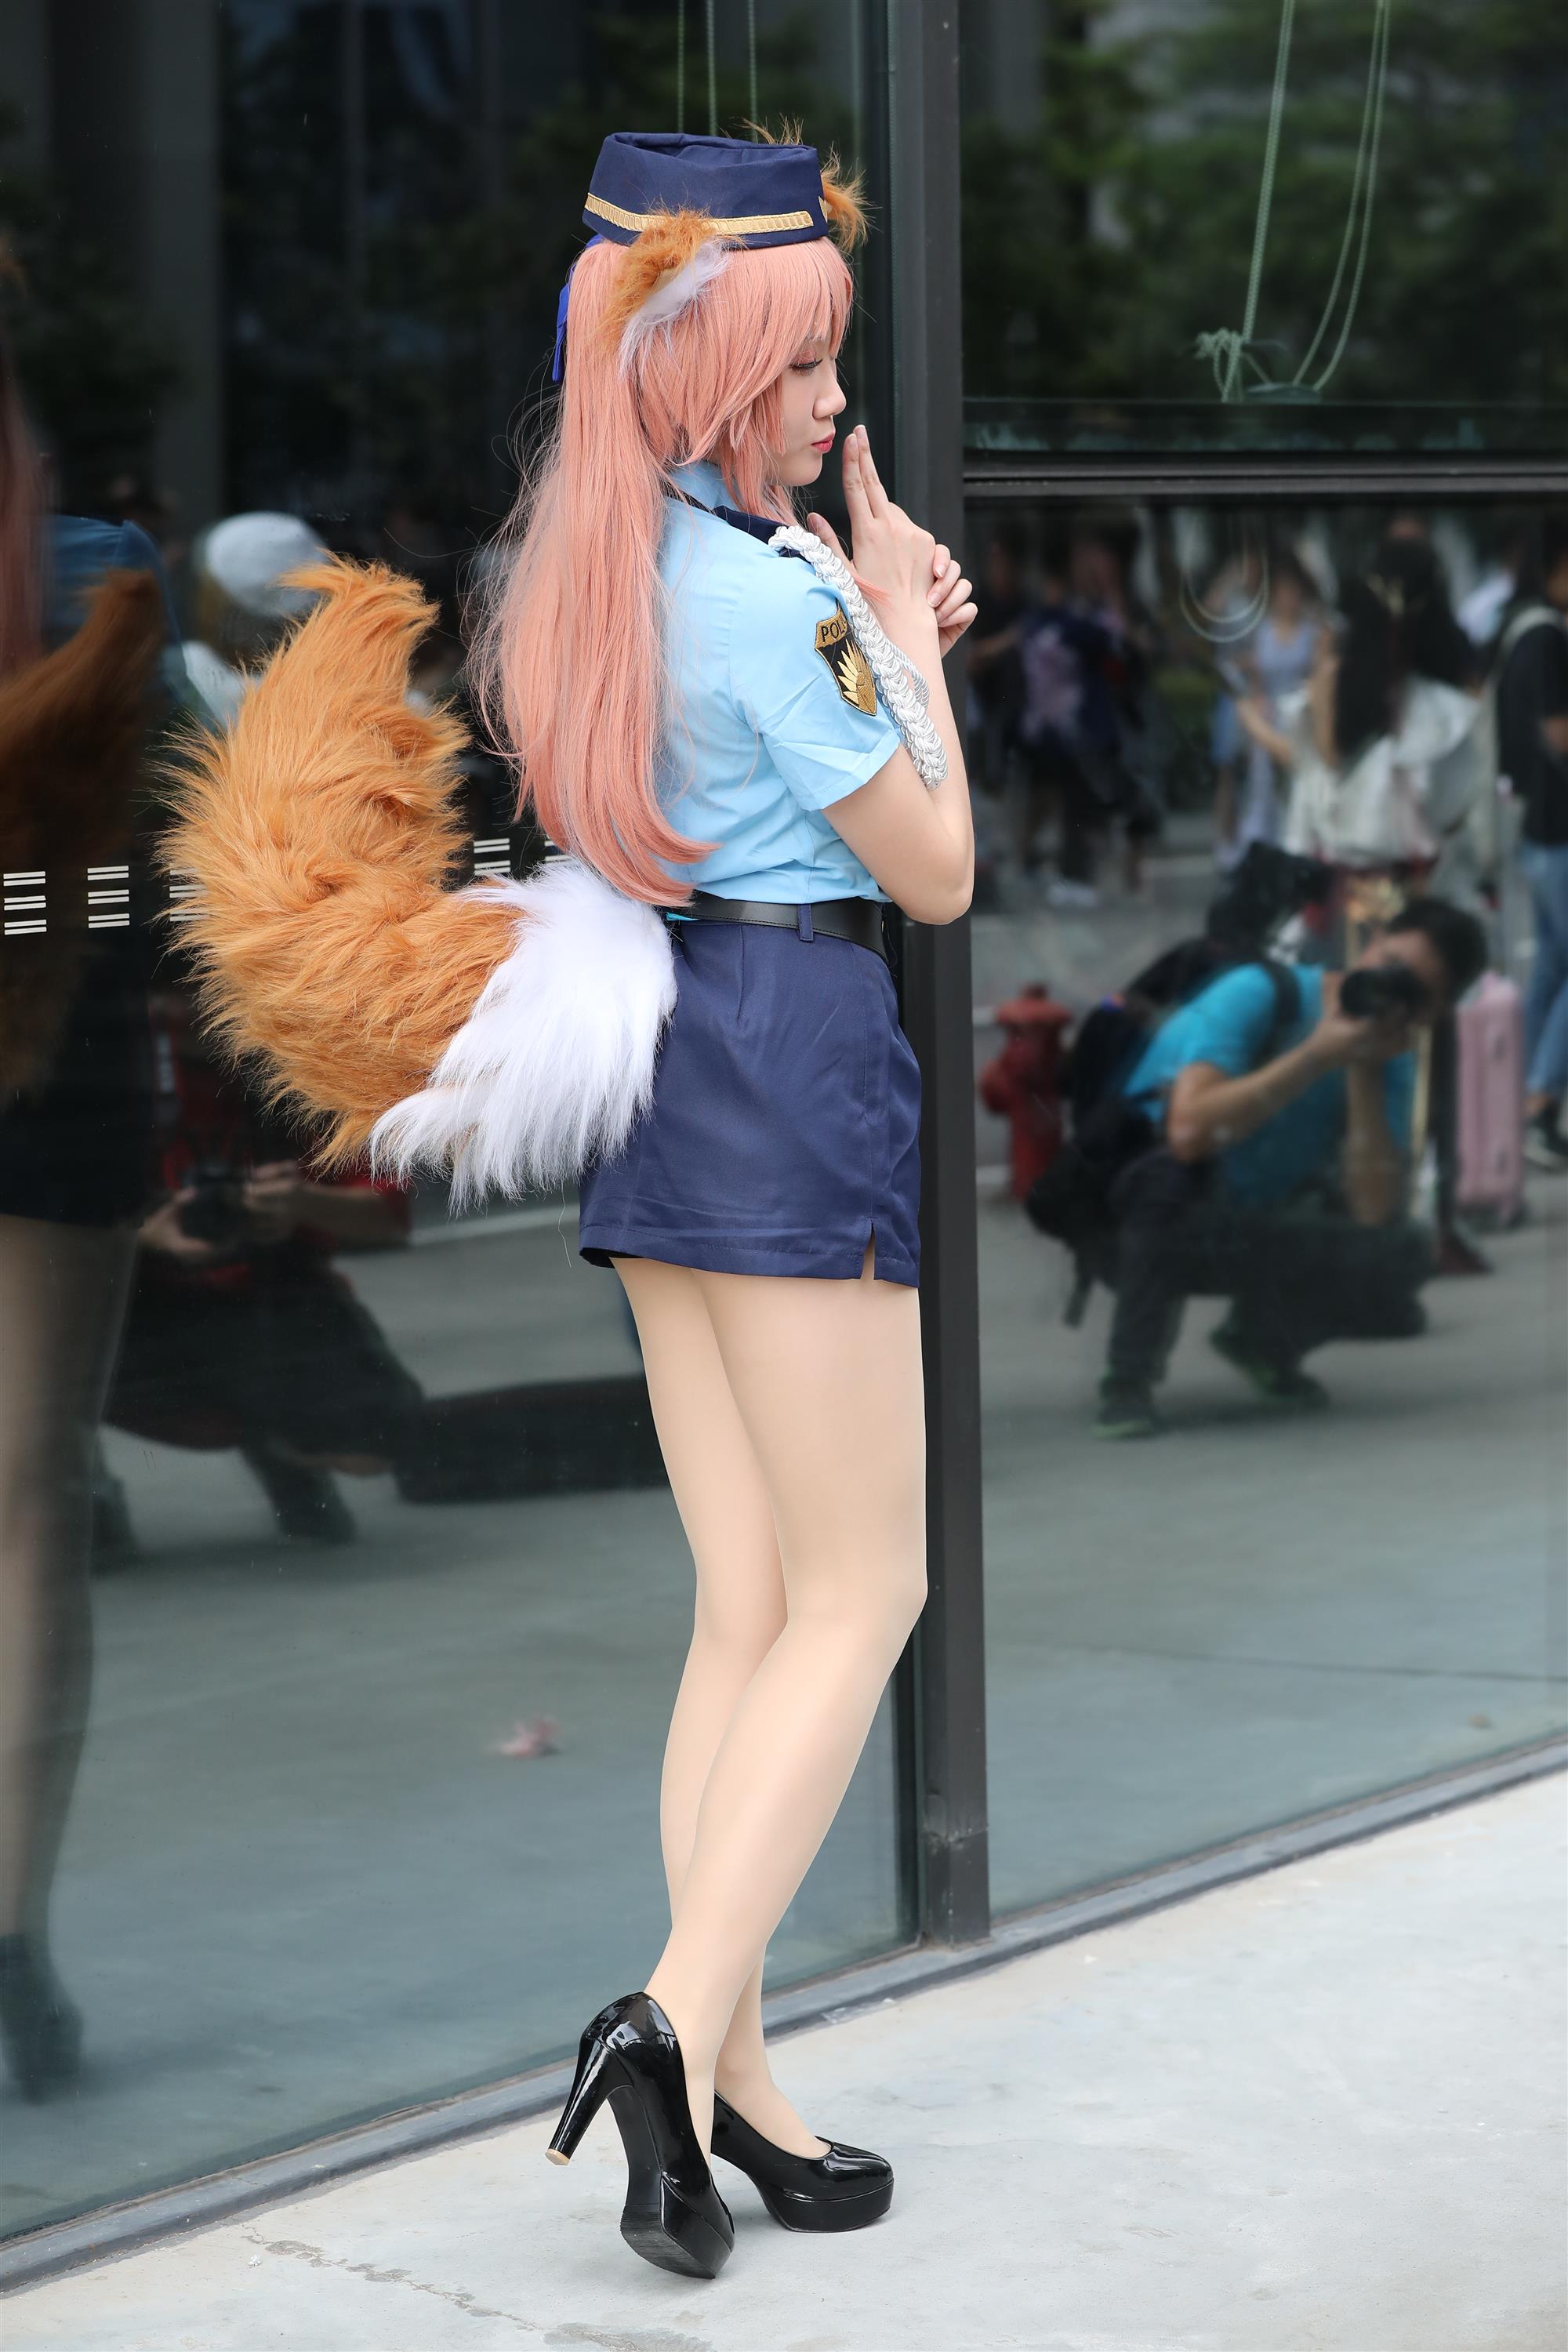 Street cosplay girl - 56.jpg